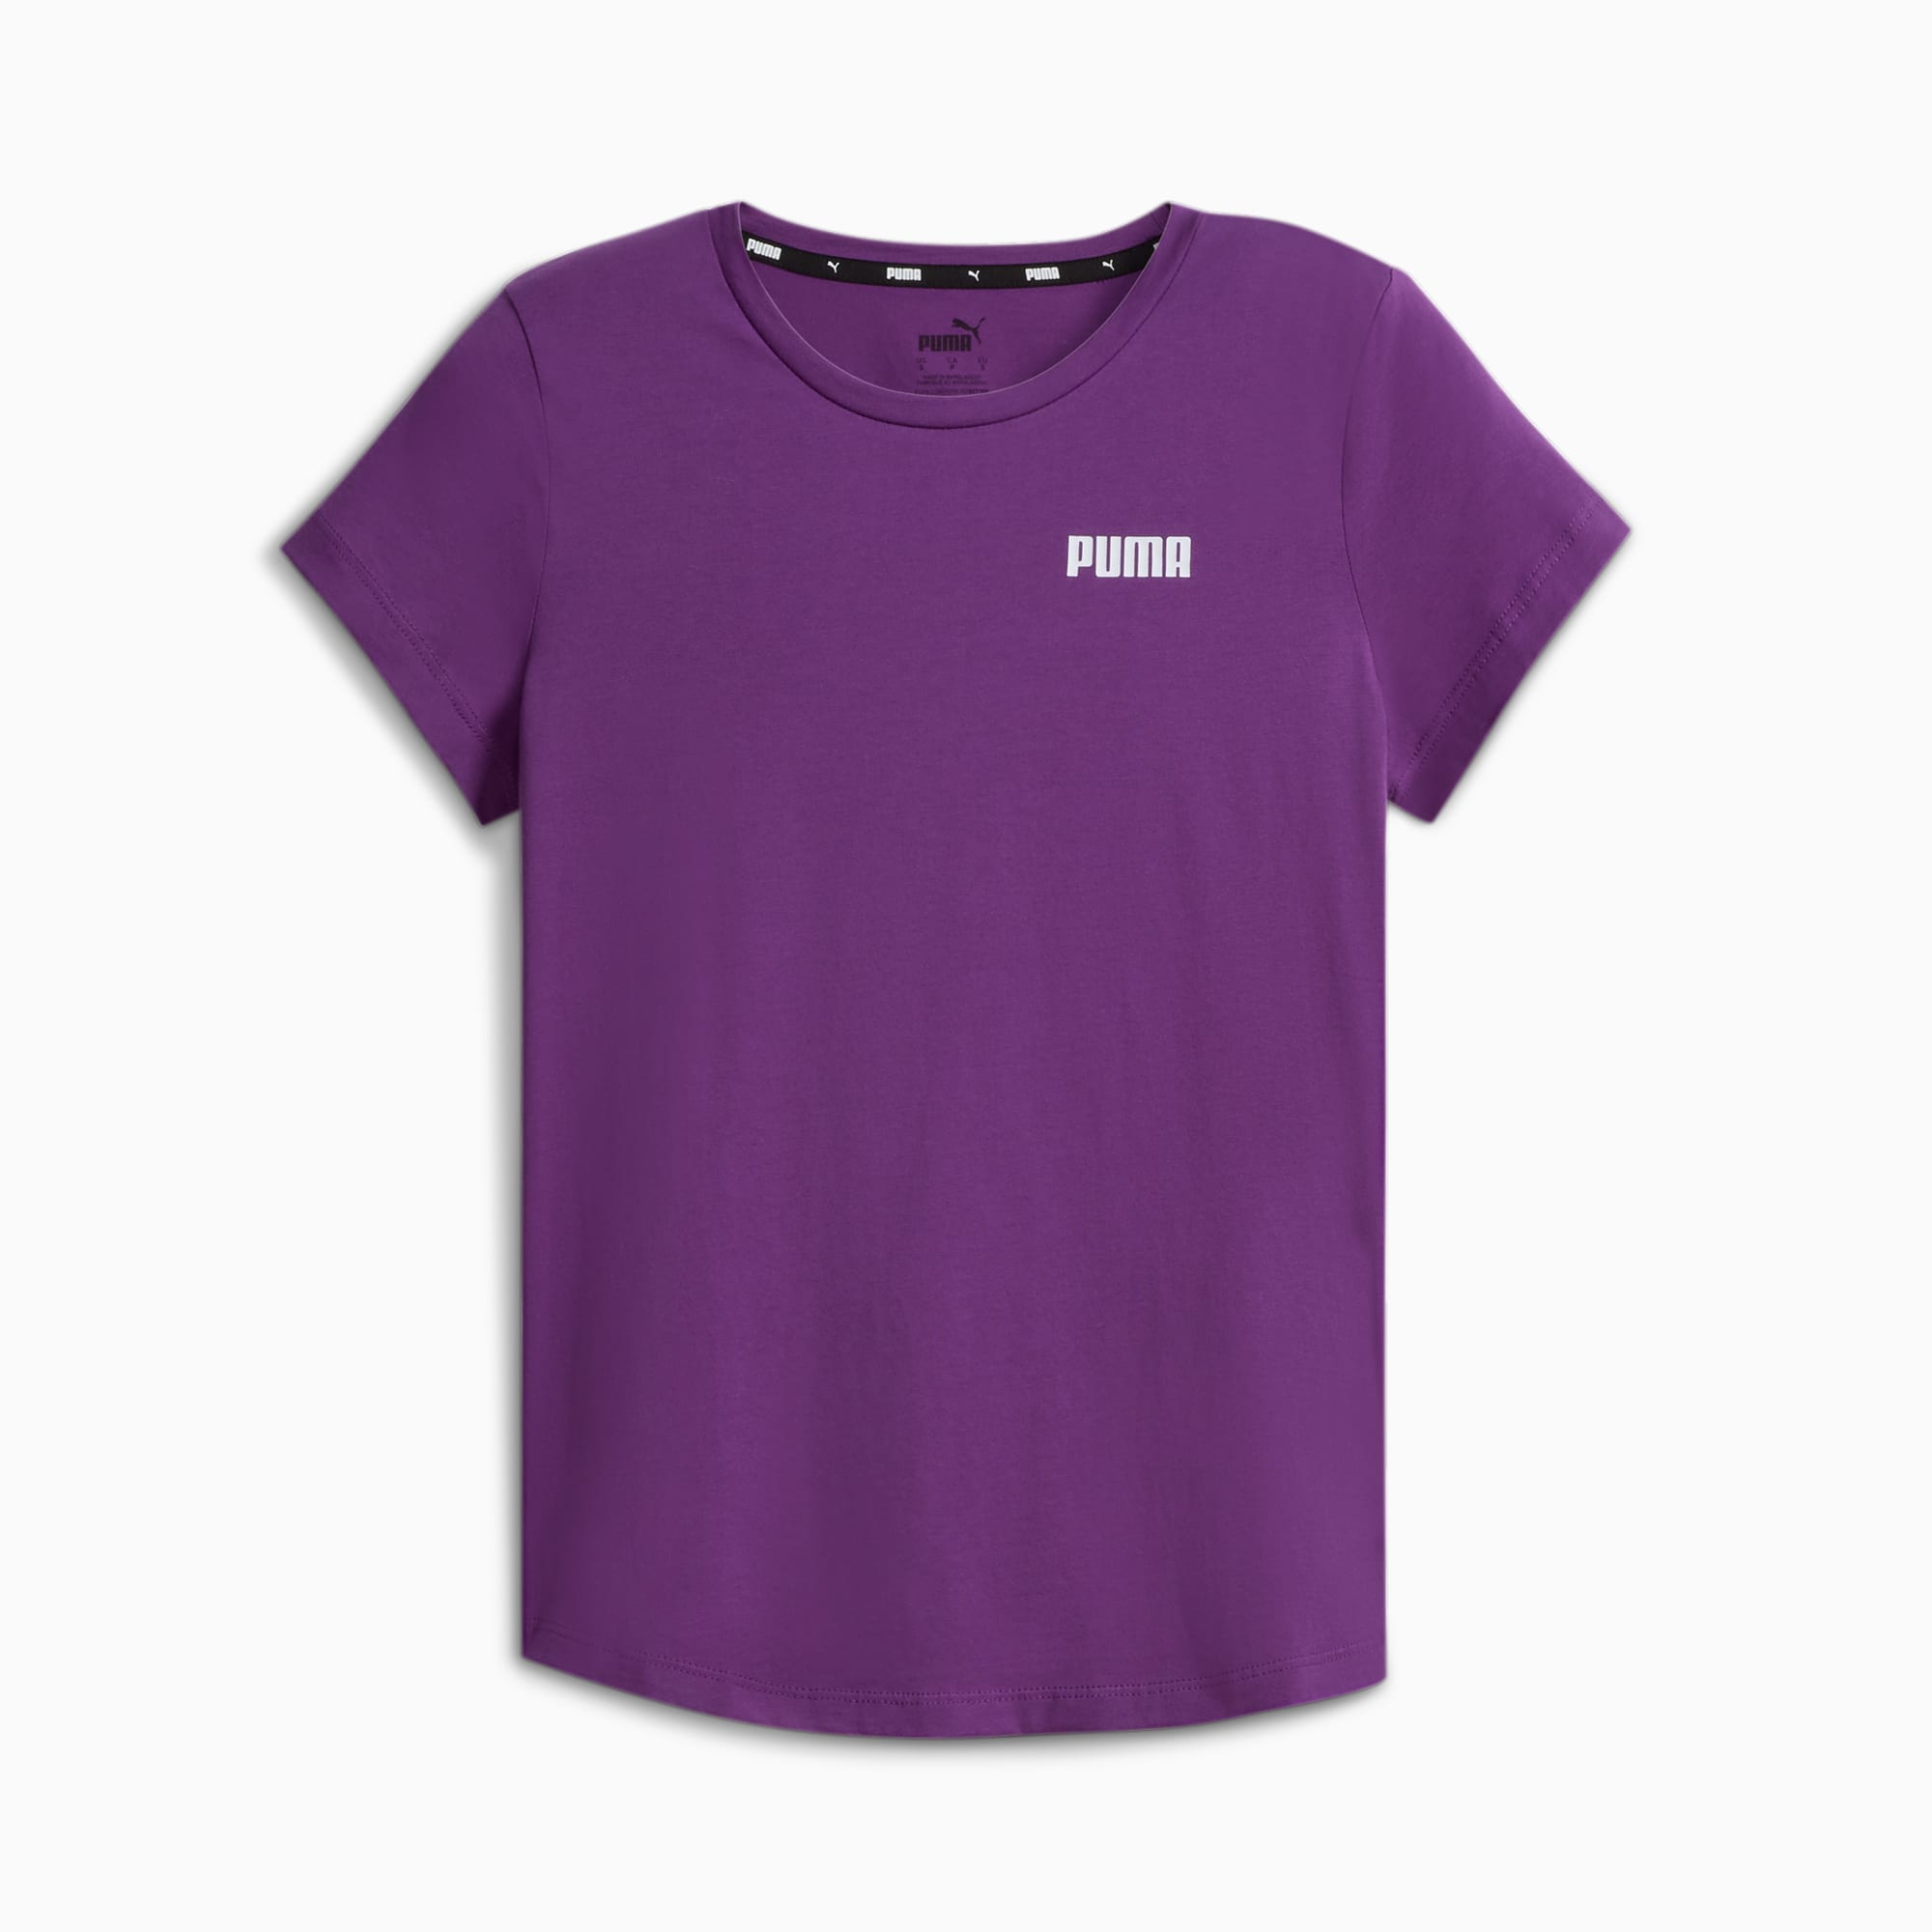 Puma Long Sleeve Star Print Athletic Tee Purple (Girls Size: XL 18